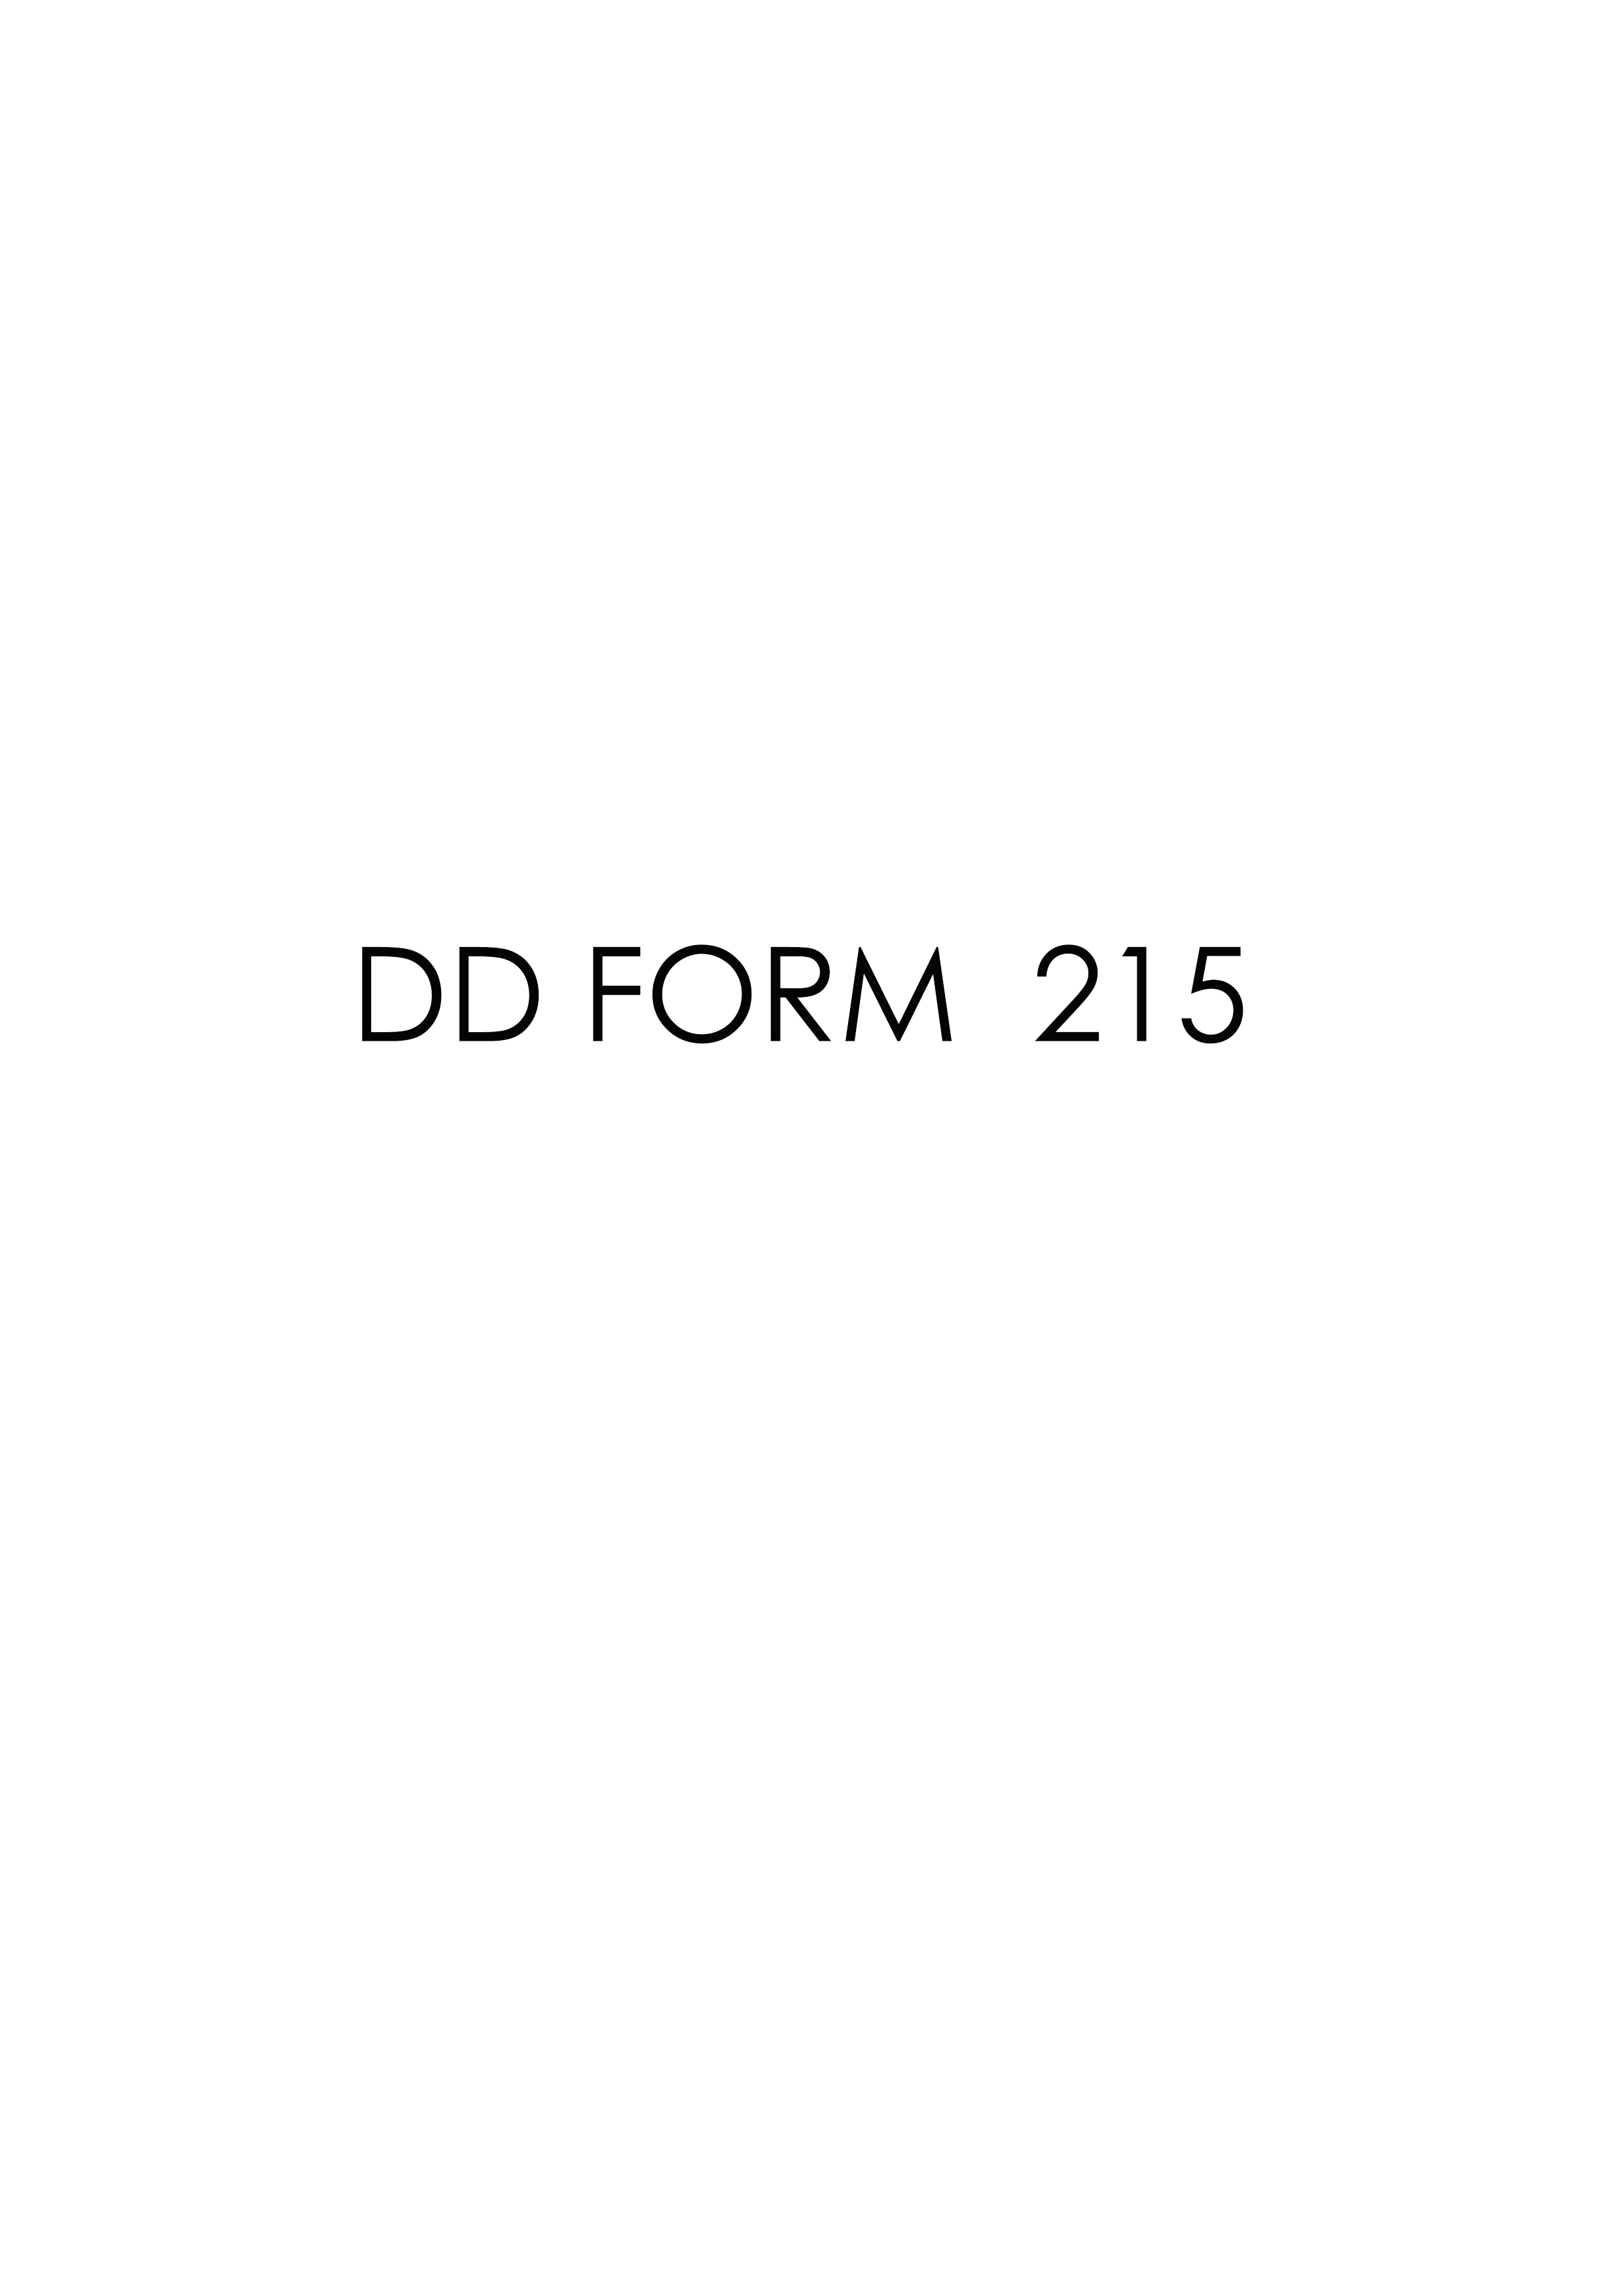 Download dd 215 Form